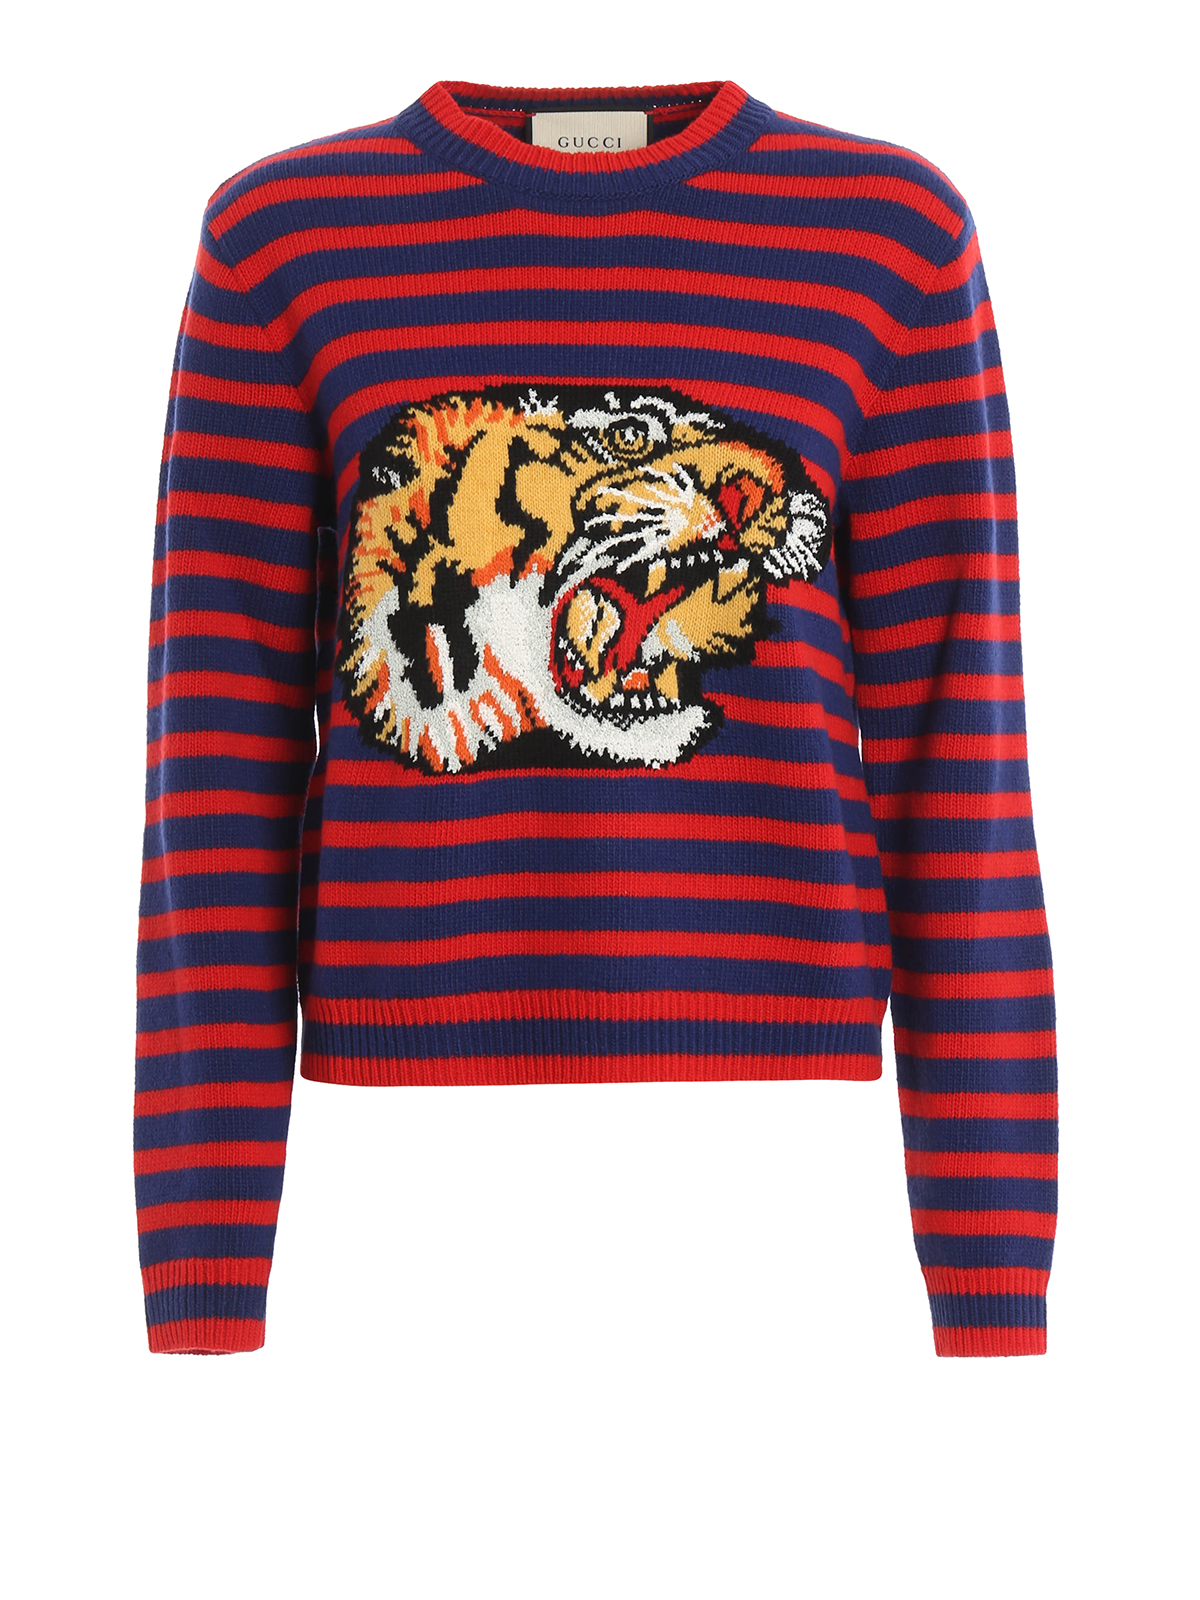 gucci tiger head sweater